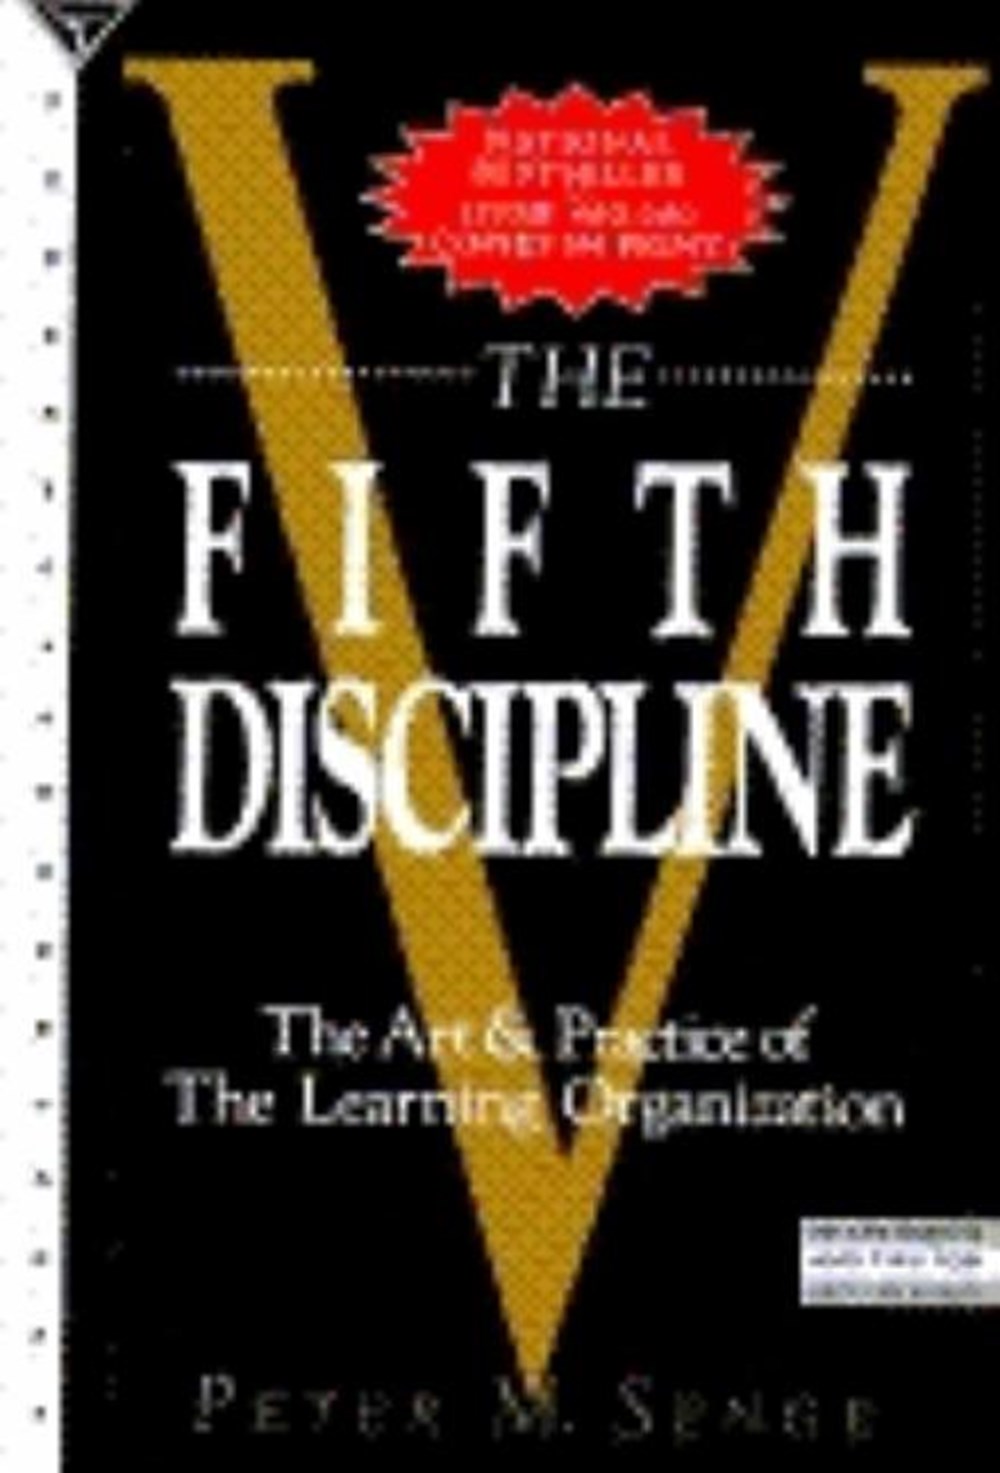 Fifth Discipline